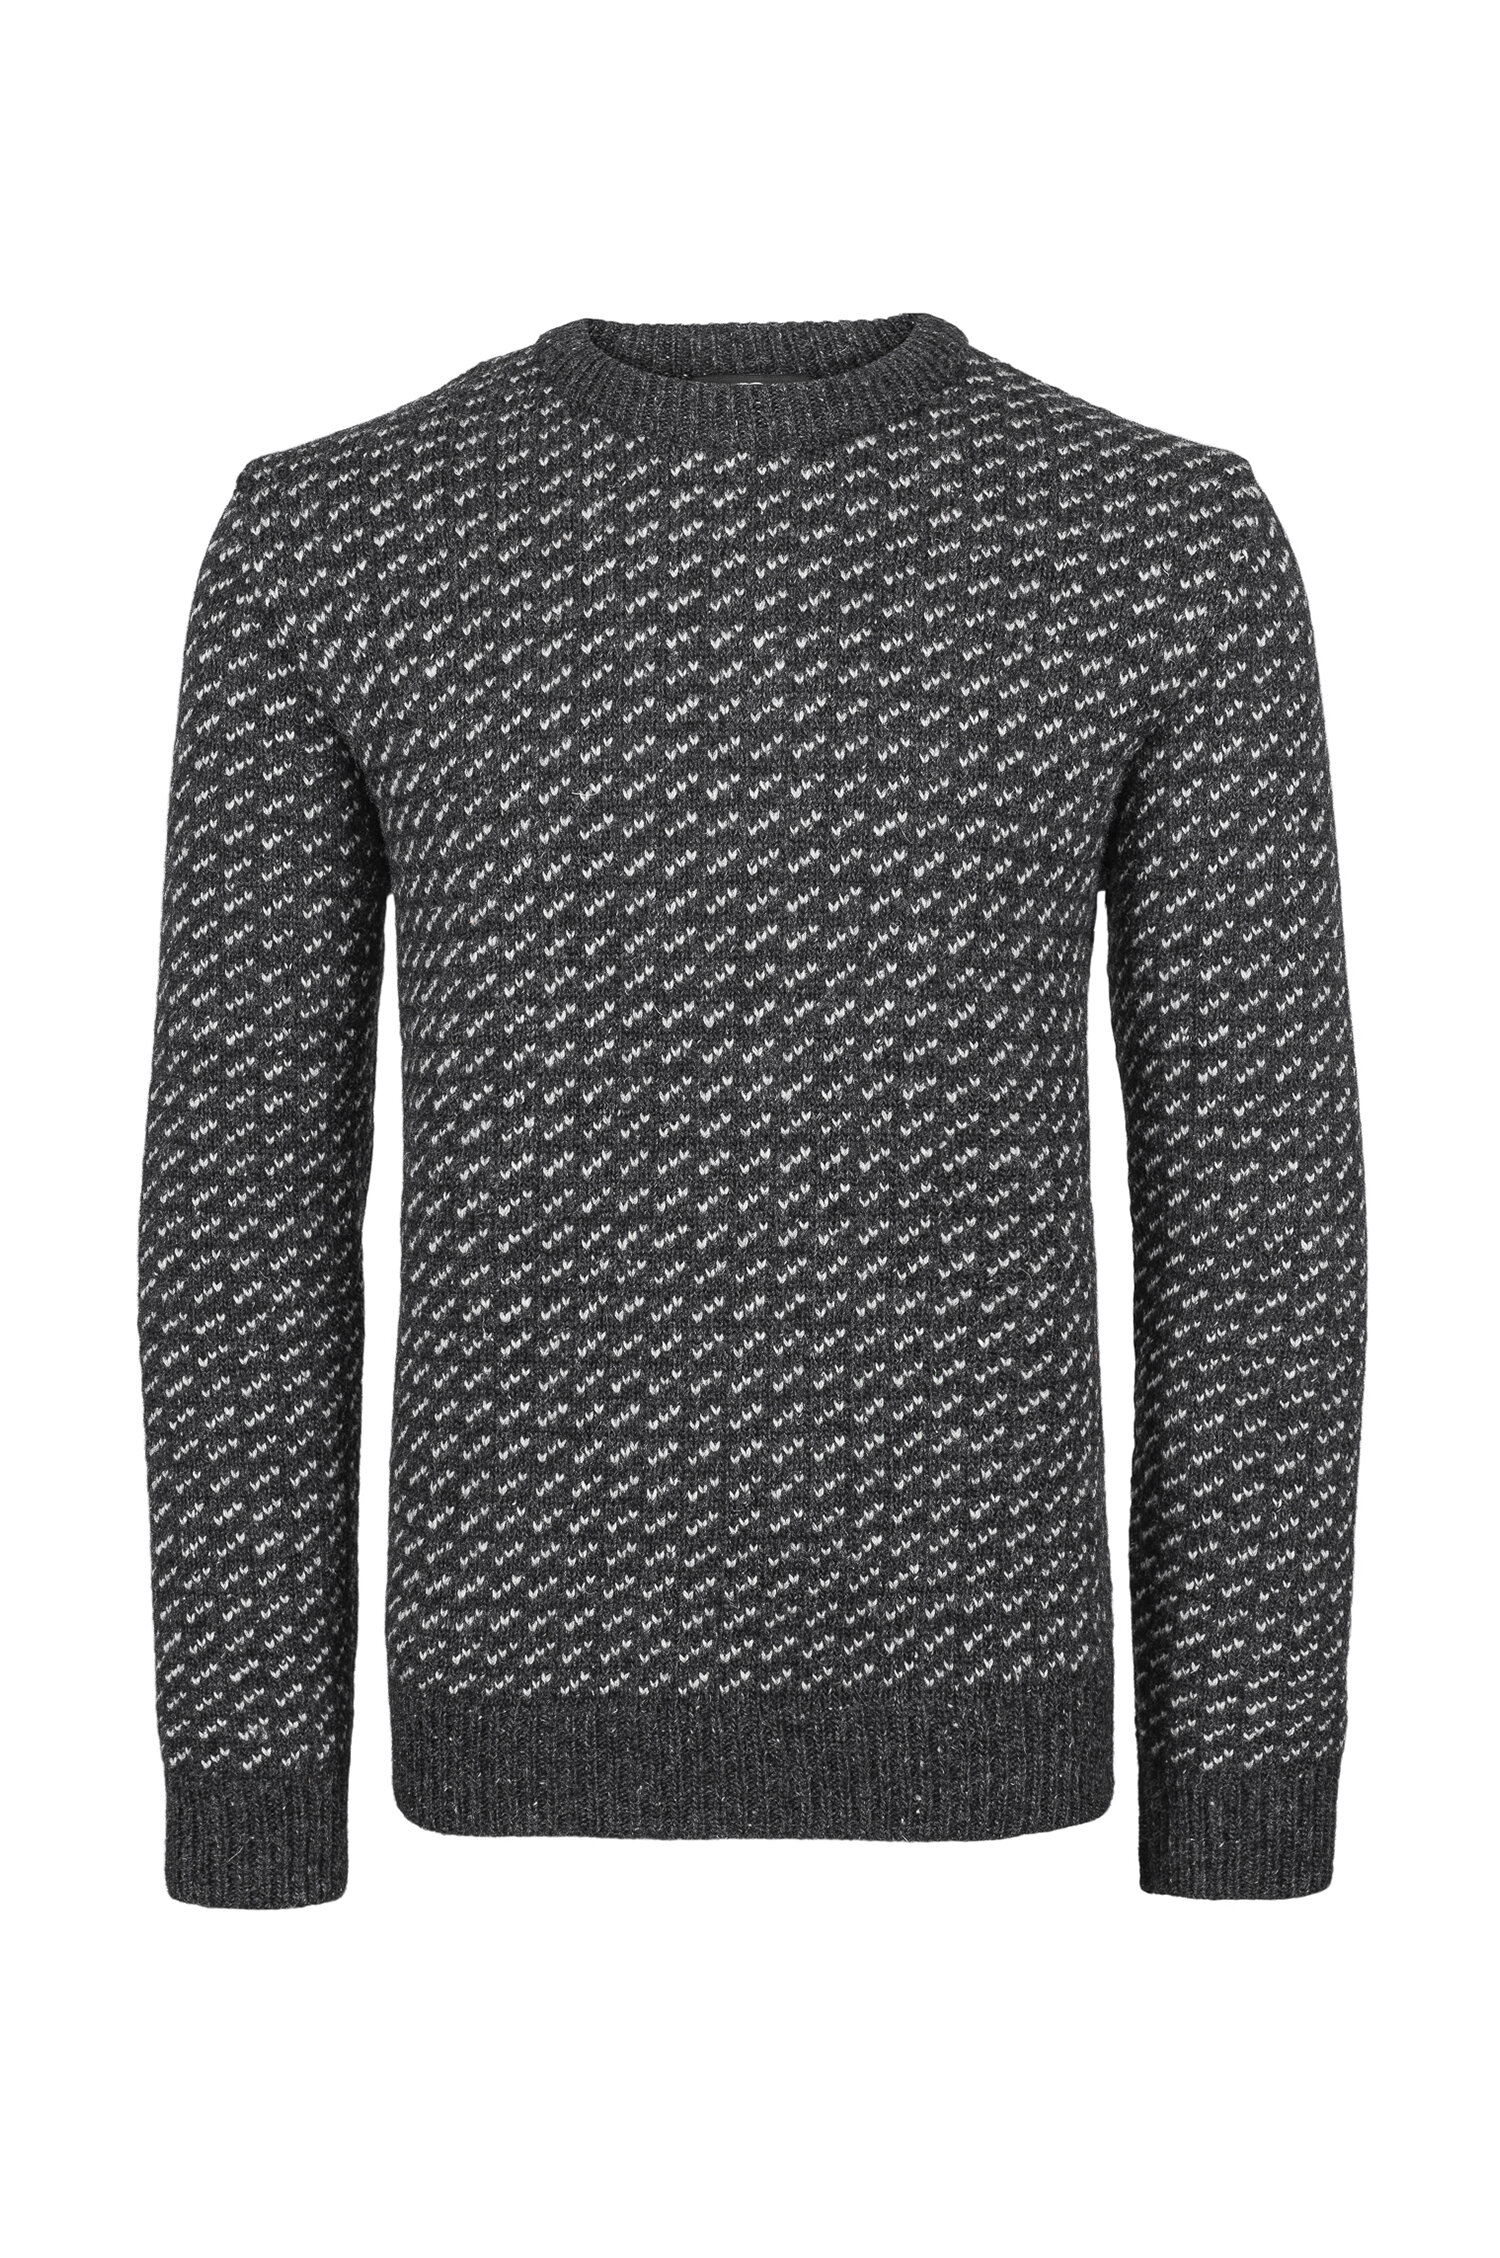 Norlender Knitwear — Original Norwegian sweater